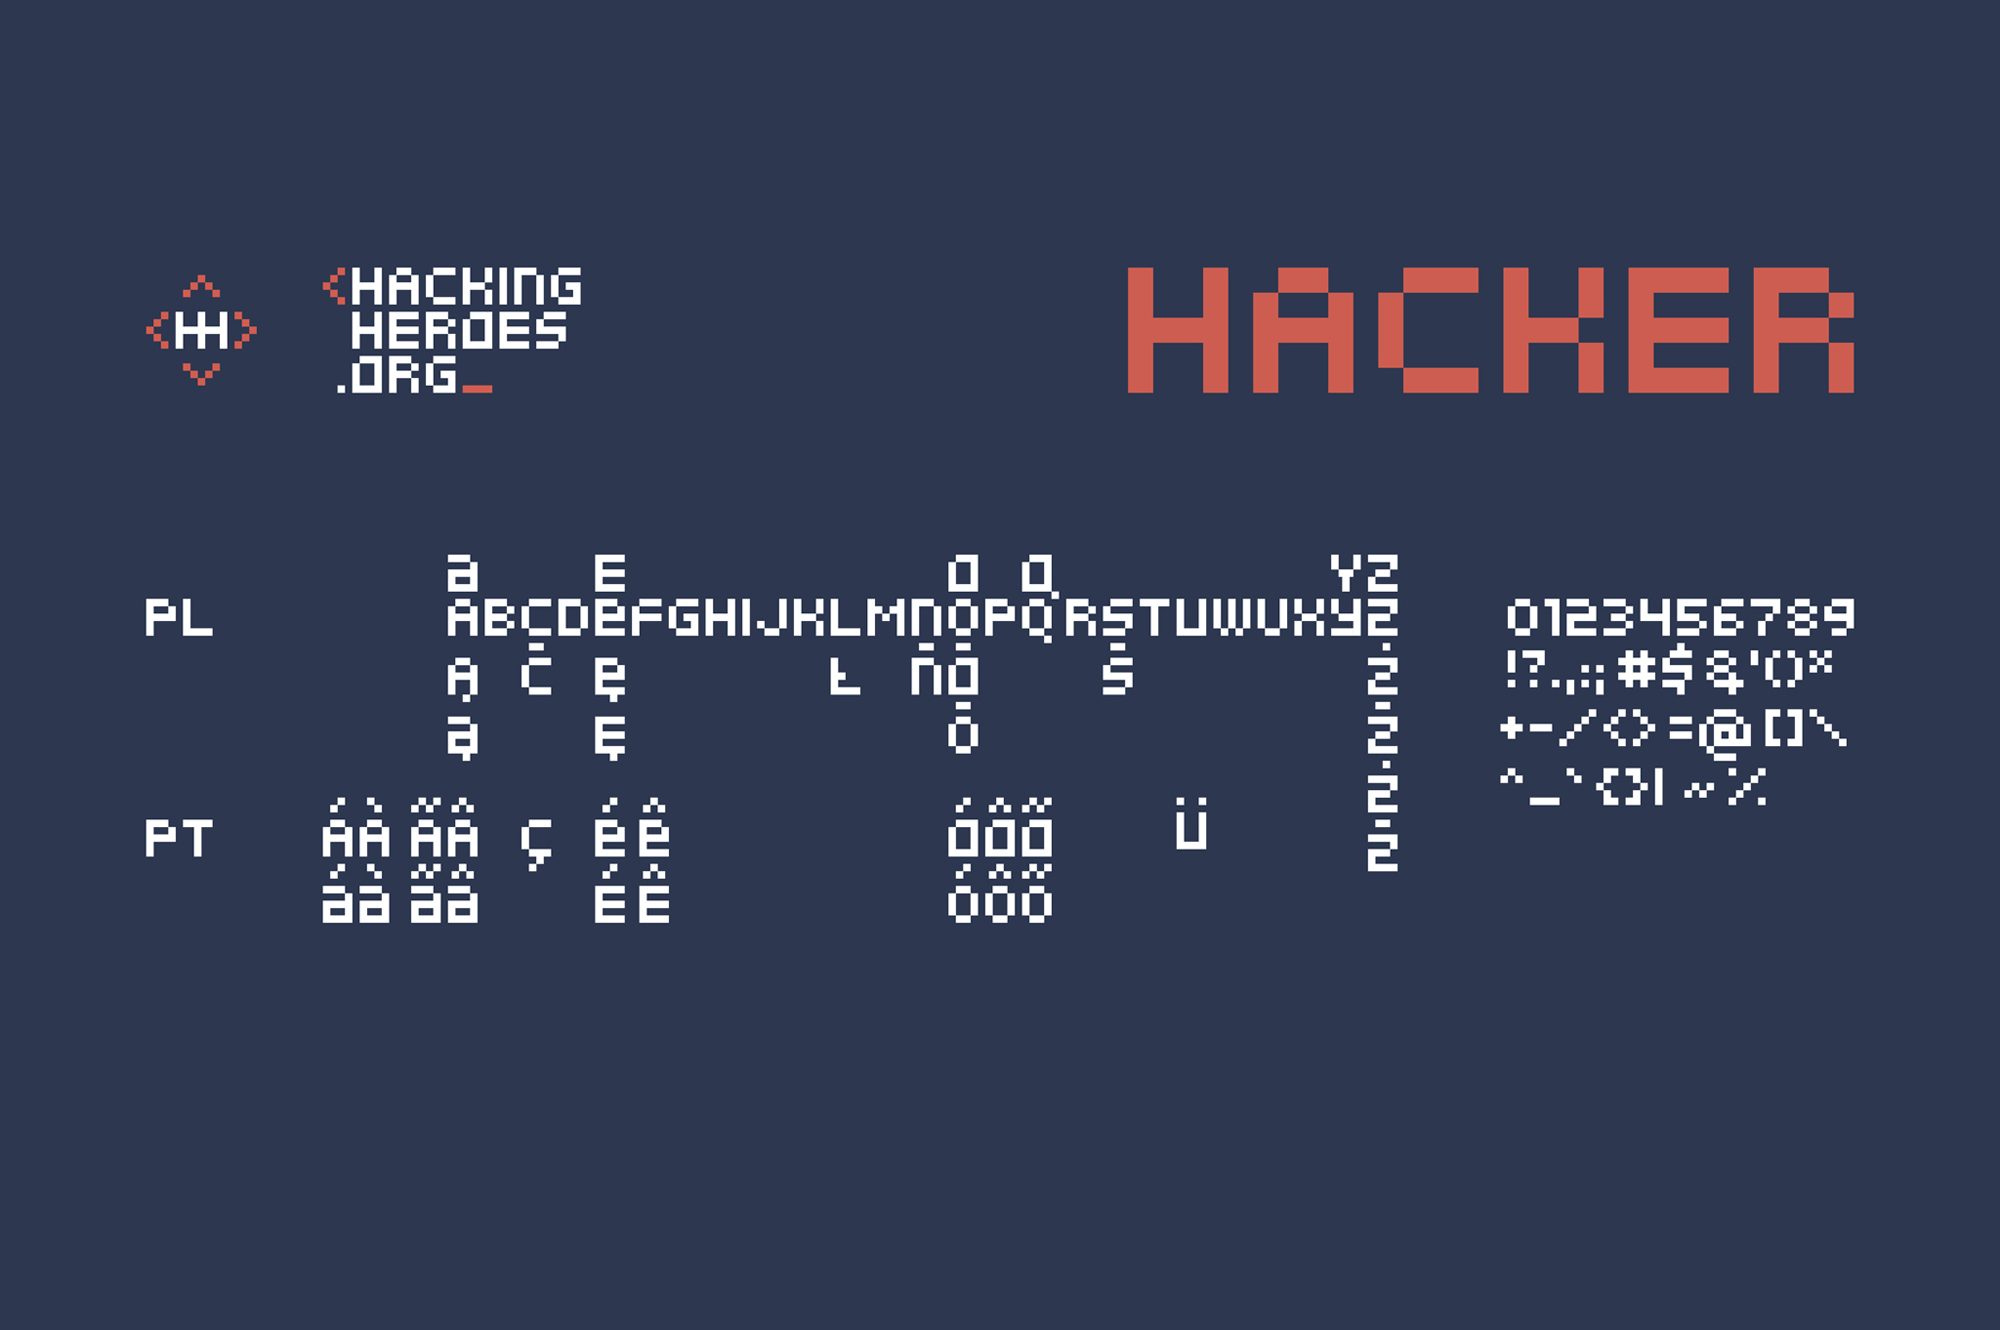 hackingheroes.org - HACKER font kolor